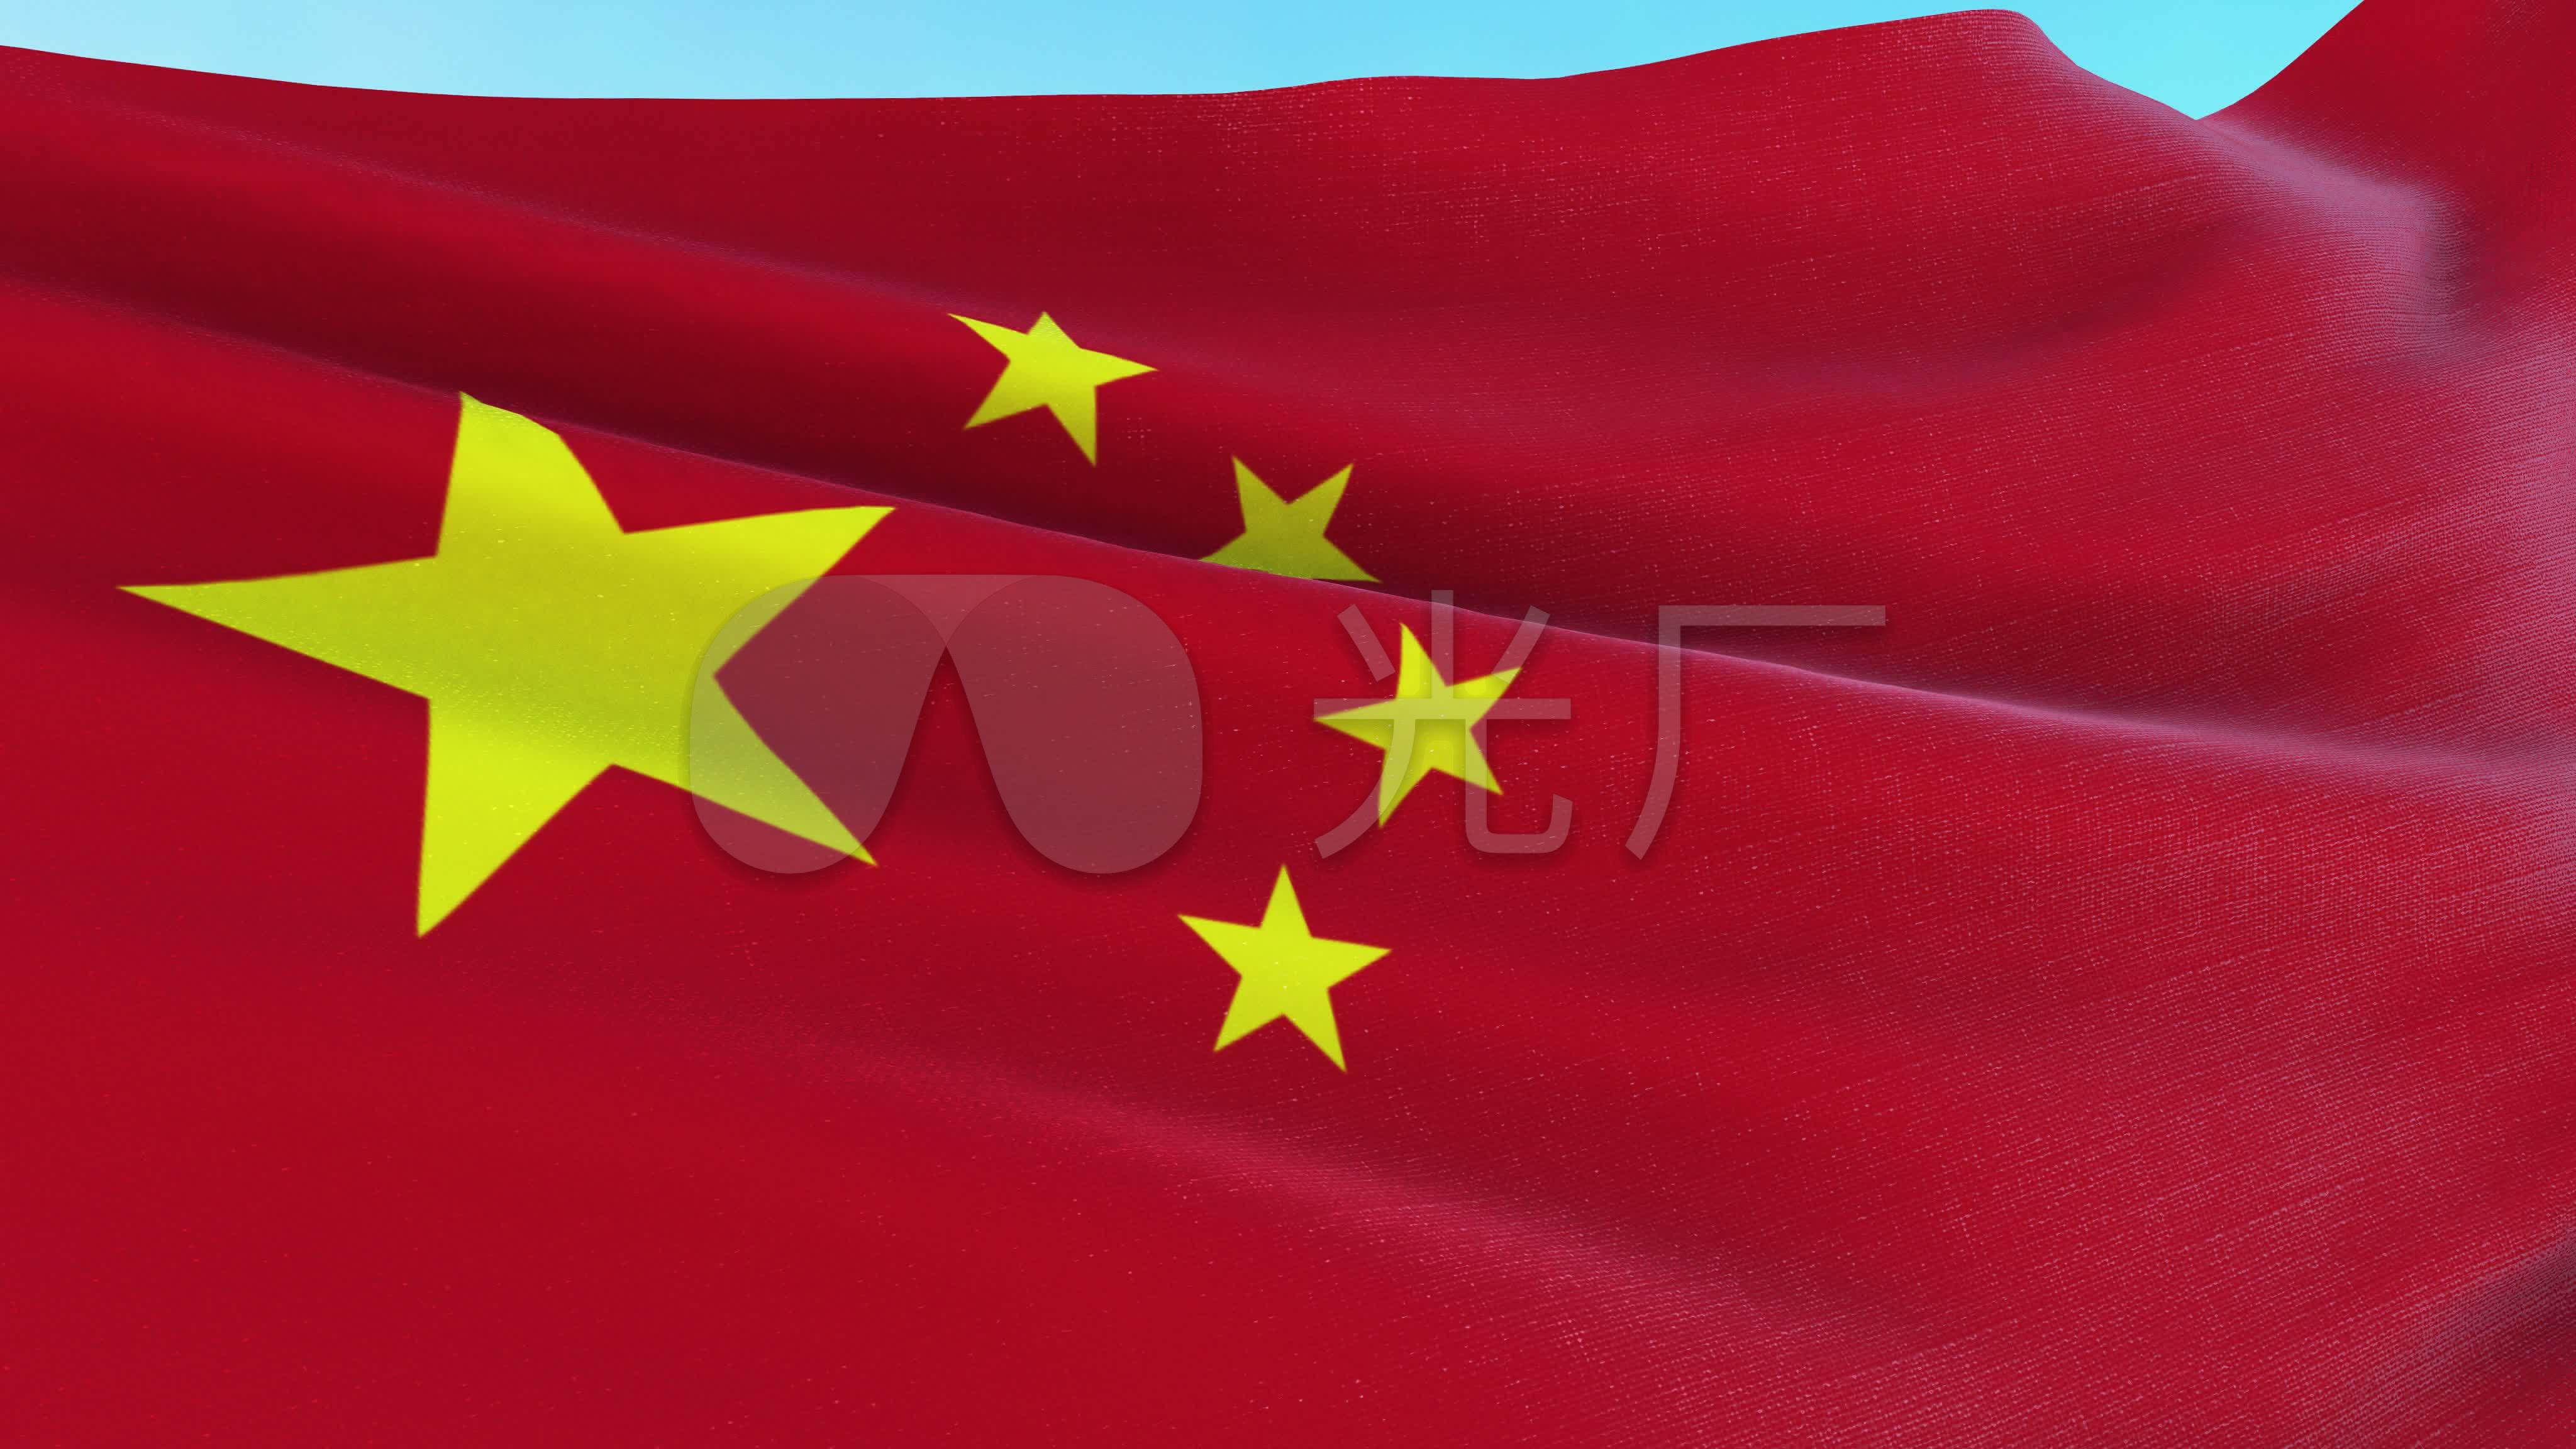 4k国旗,国旗,中华人民共和国五星红旗_4096x2304_高清视频素材下载